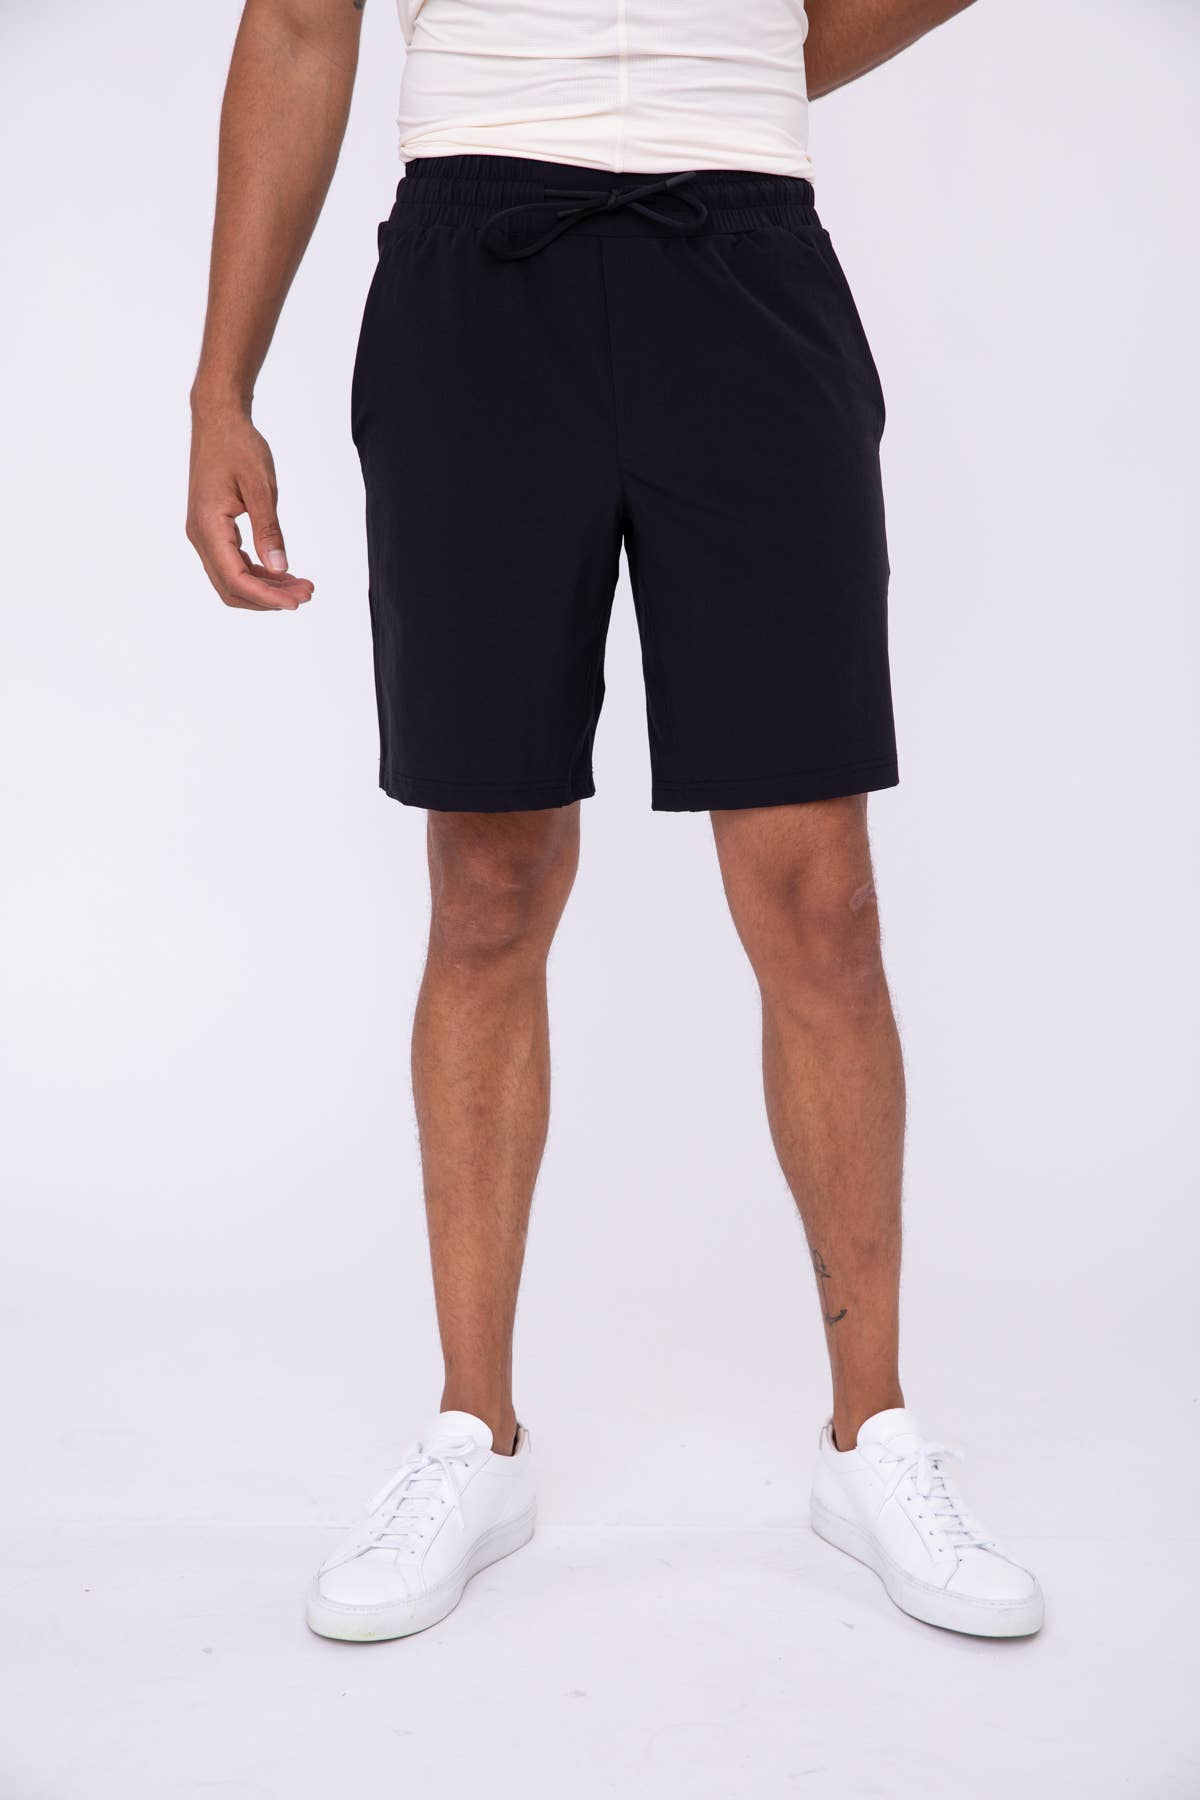 Men’s Drawstring Shorts with Pockets Black